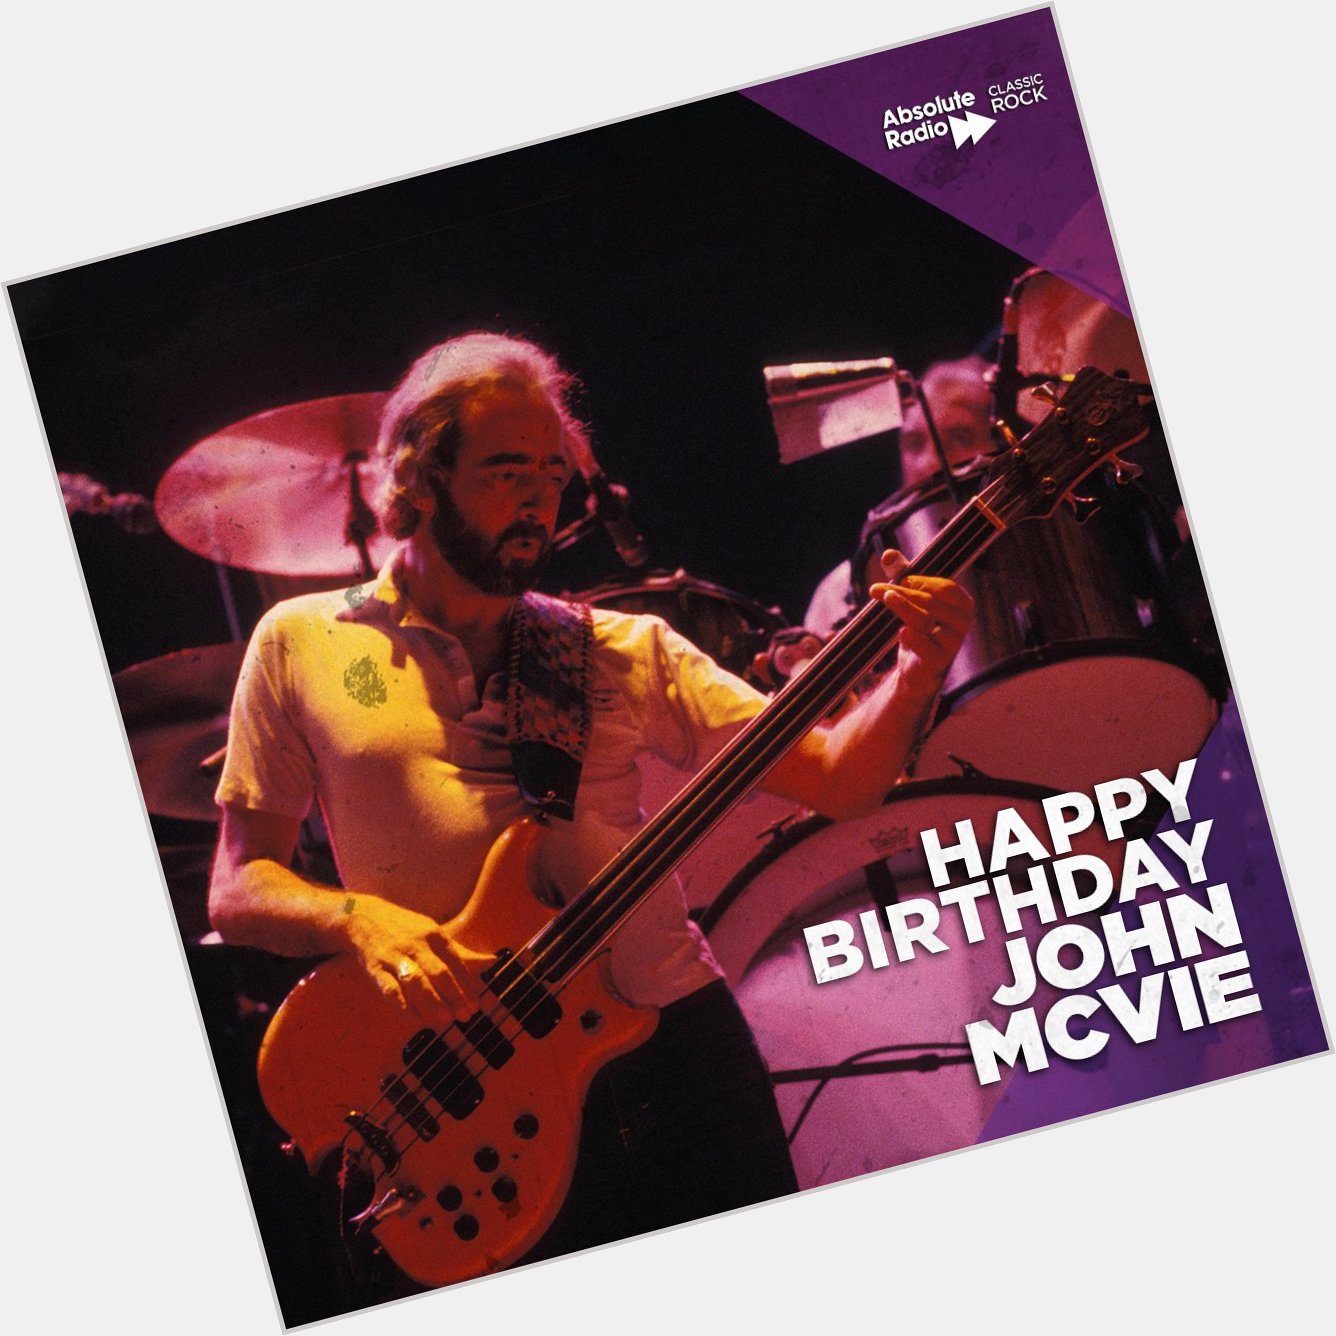 Happy birthday John McVie! The bassist turns 75 today! 